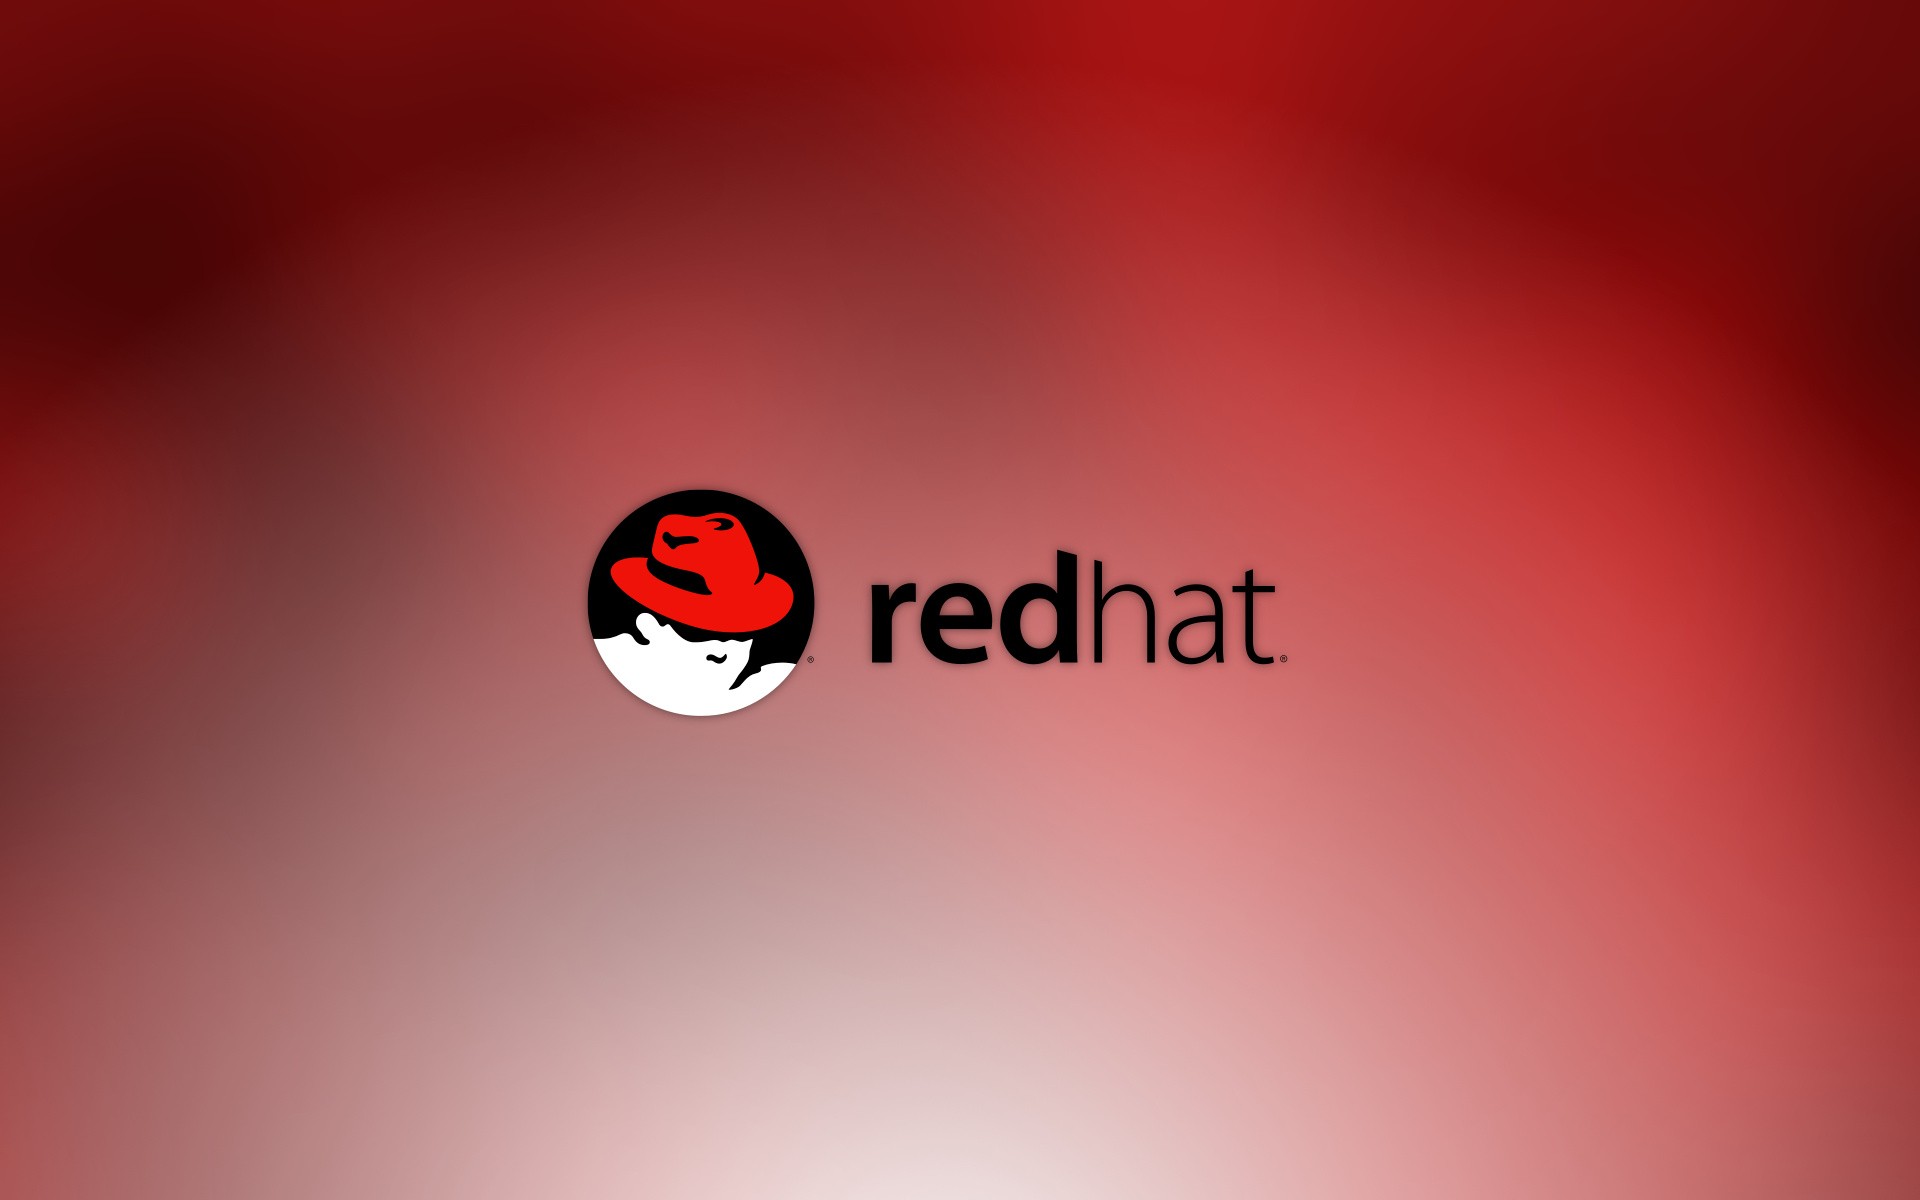 Red hat 2. Линукс Red hat. Ред хэт Энтерпрайз линукс. RHEL Linux. Обои Red hat.